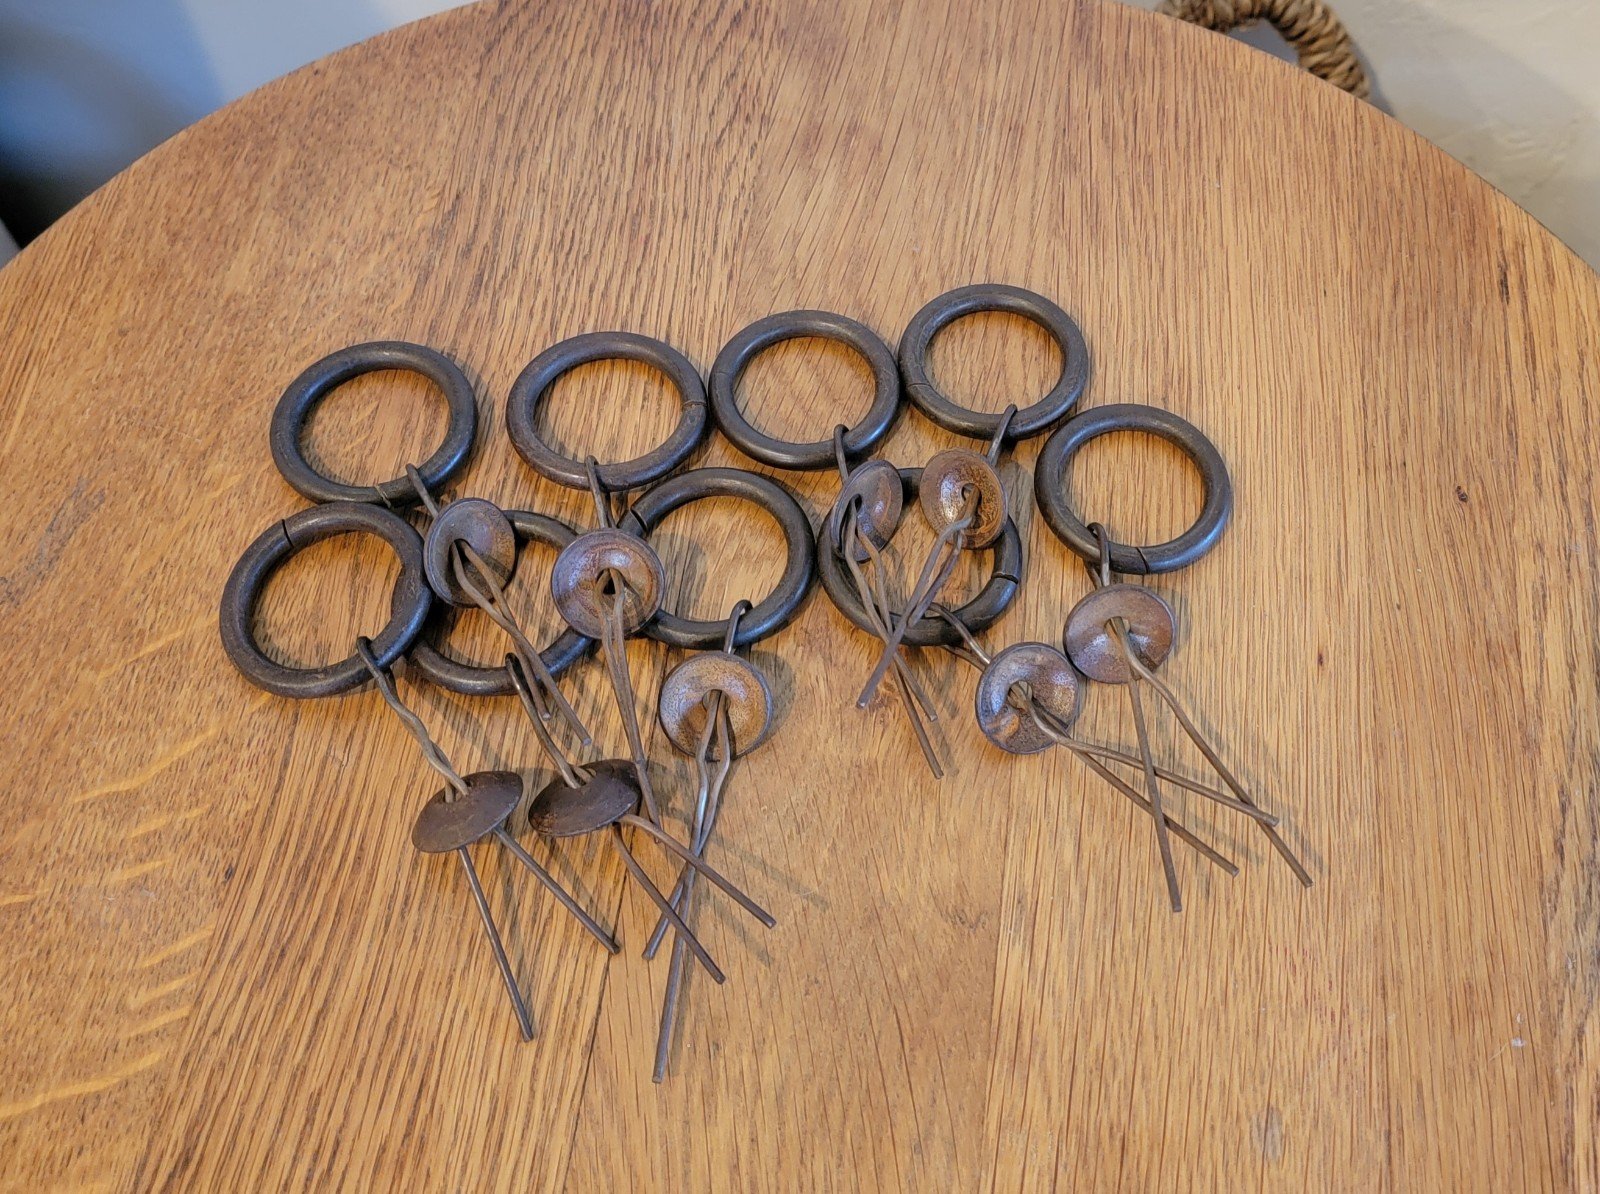 9 Rustic look dresser ring knobs oozpyhuwf